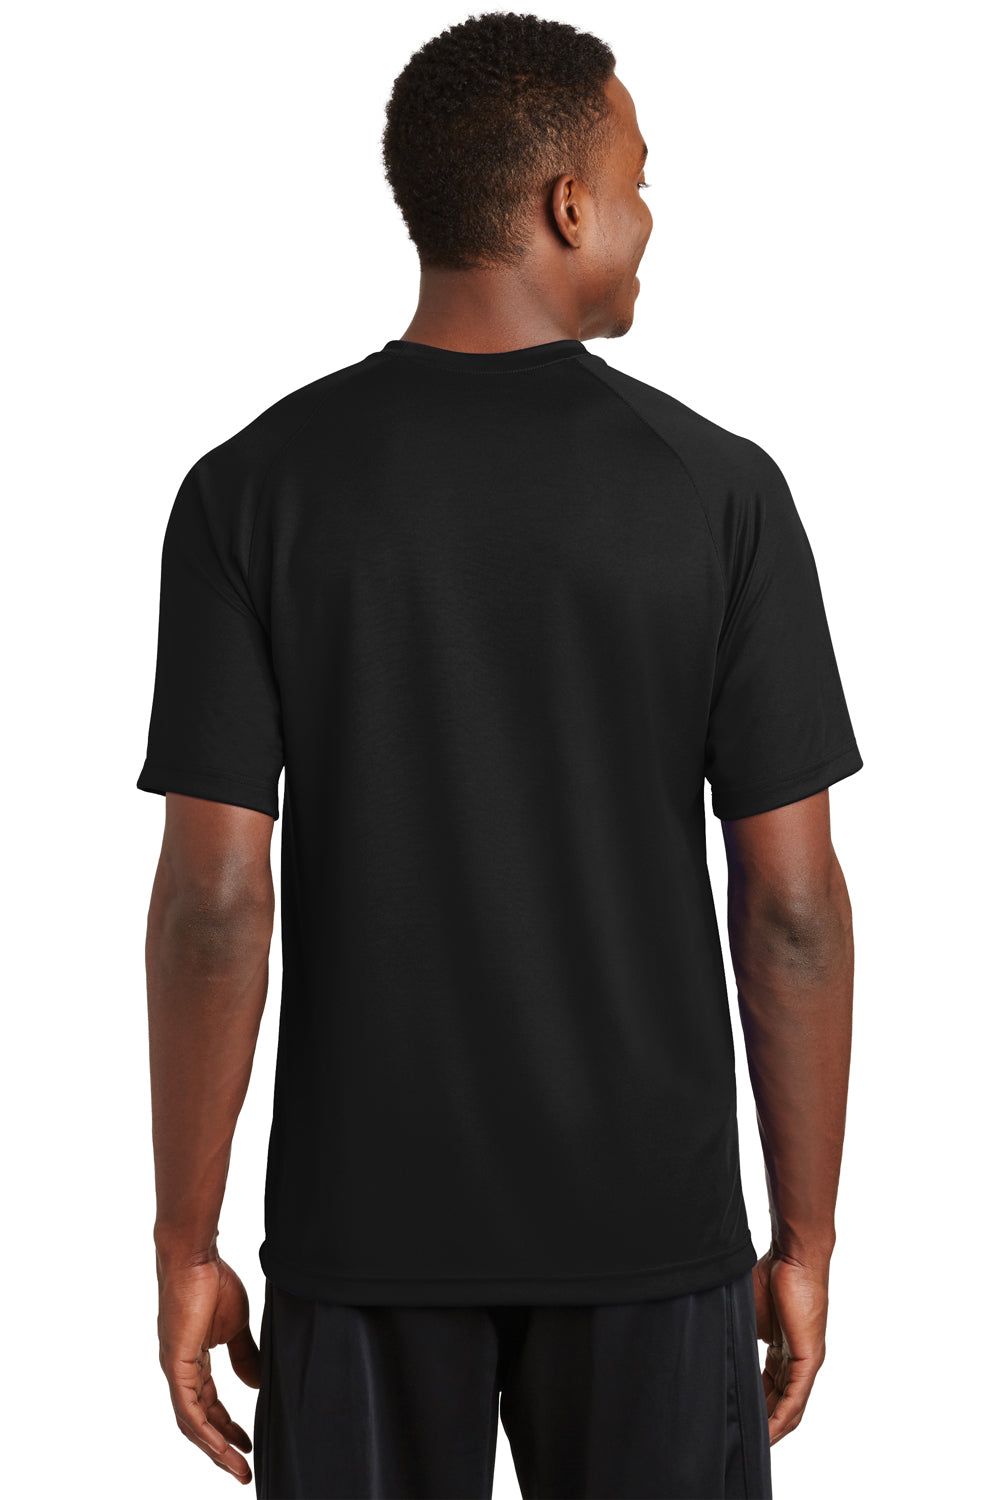 Sport-Tek T473 Mens Dry Zone Moisture Wicking Short Sleeve Crewneck T-Shirt Black Back